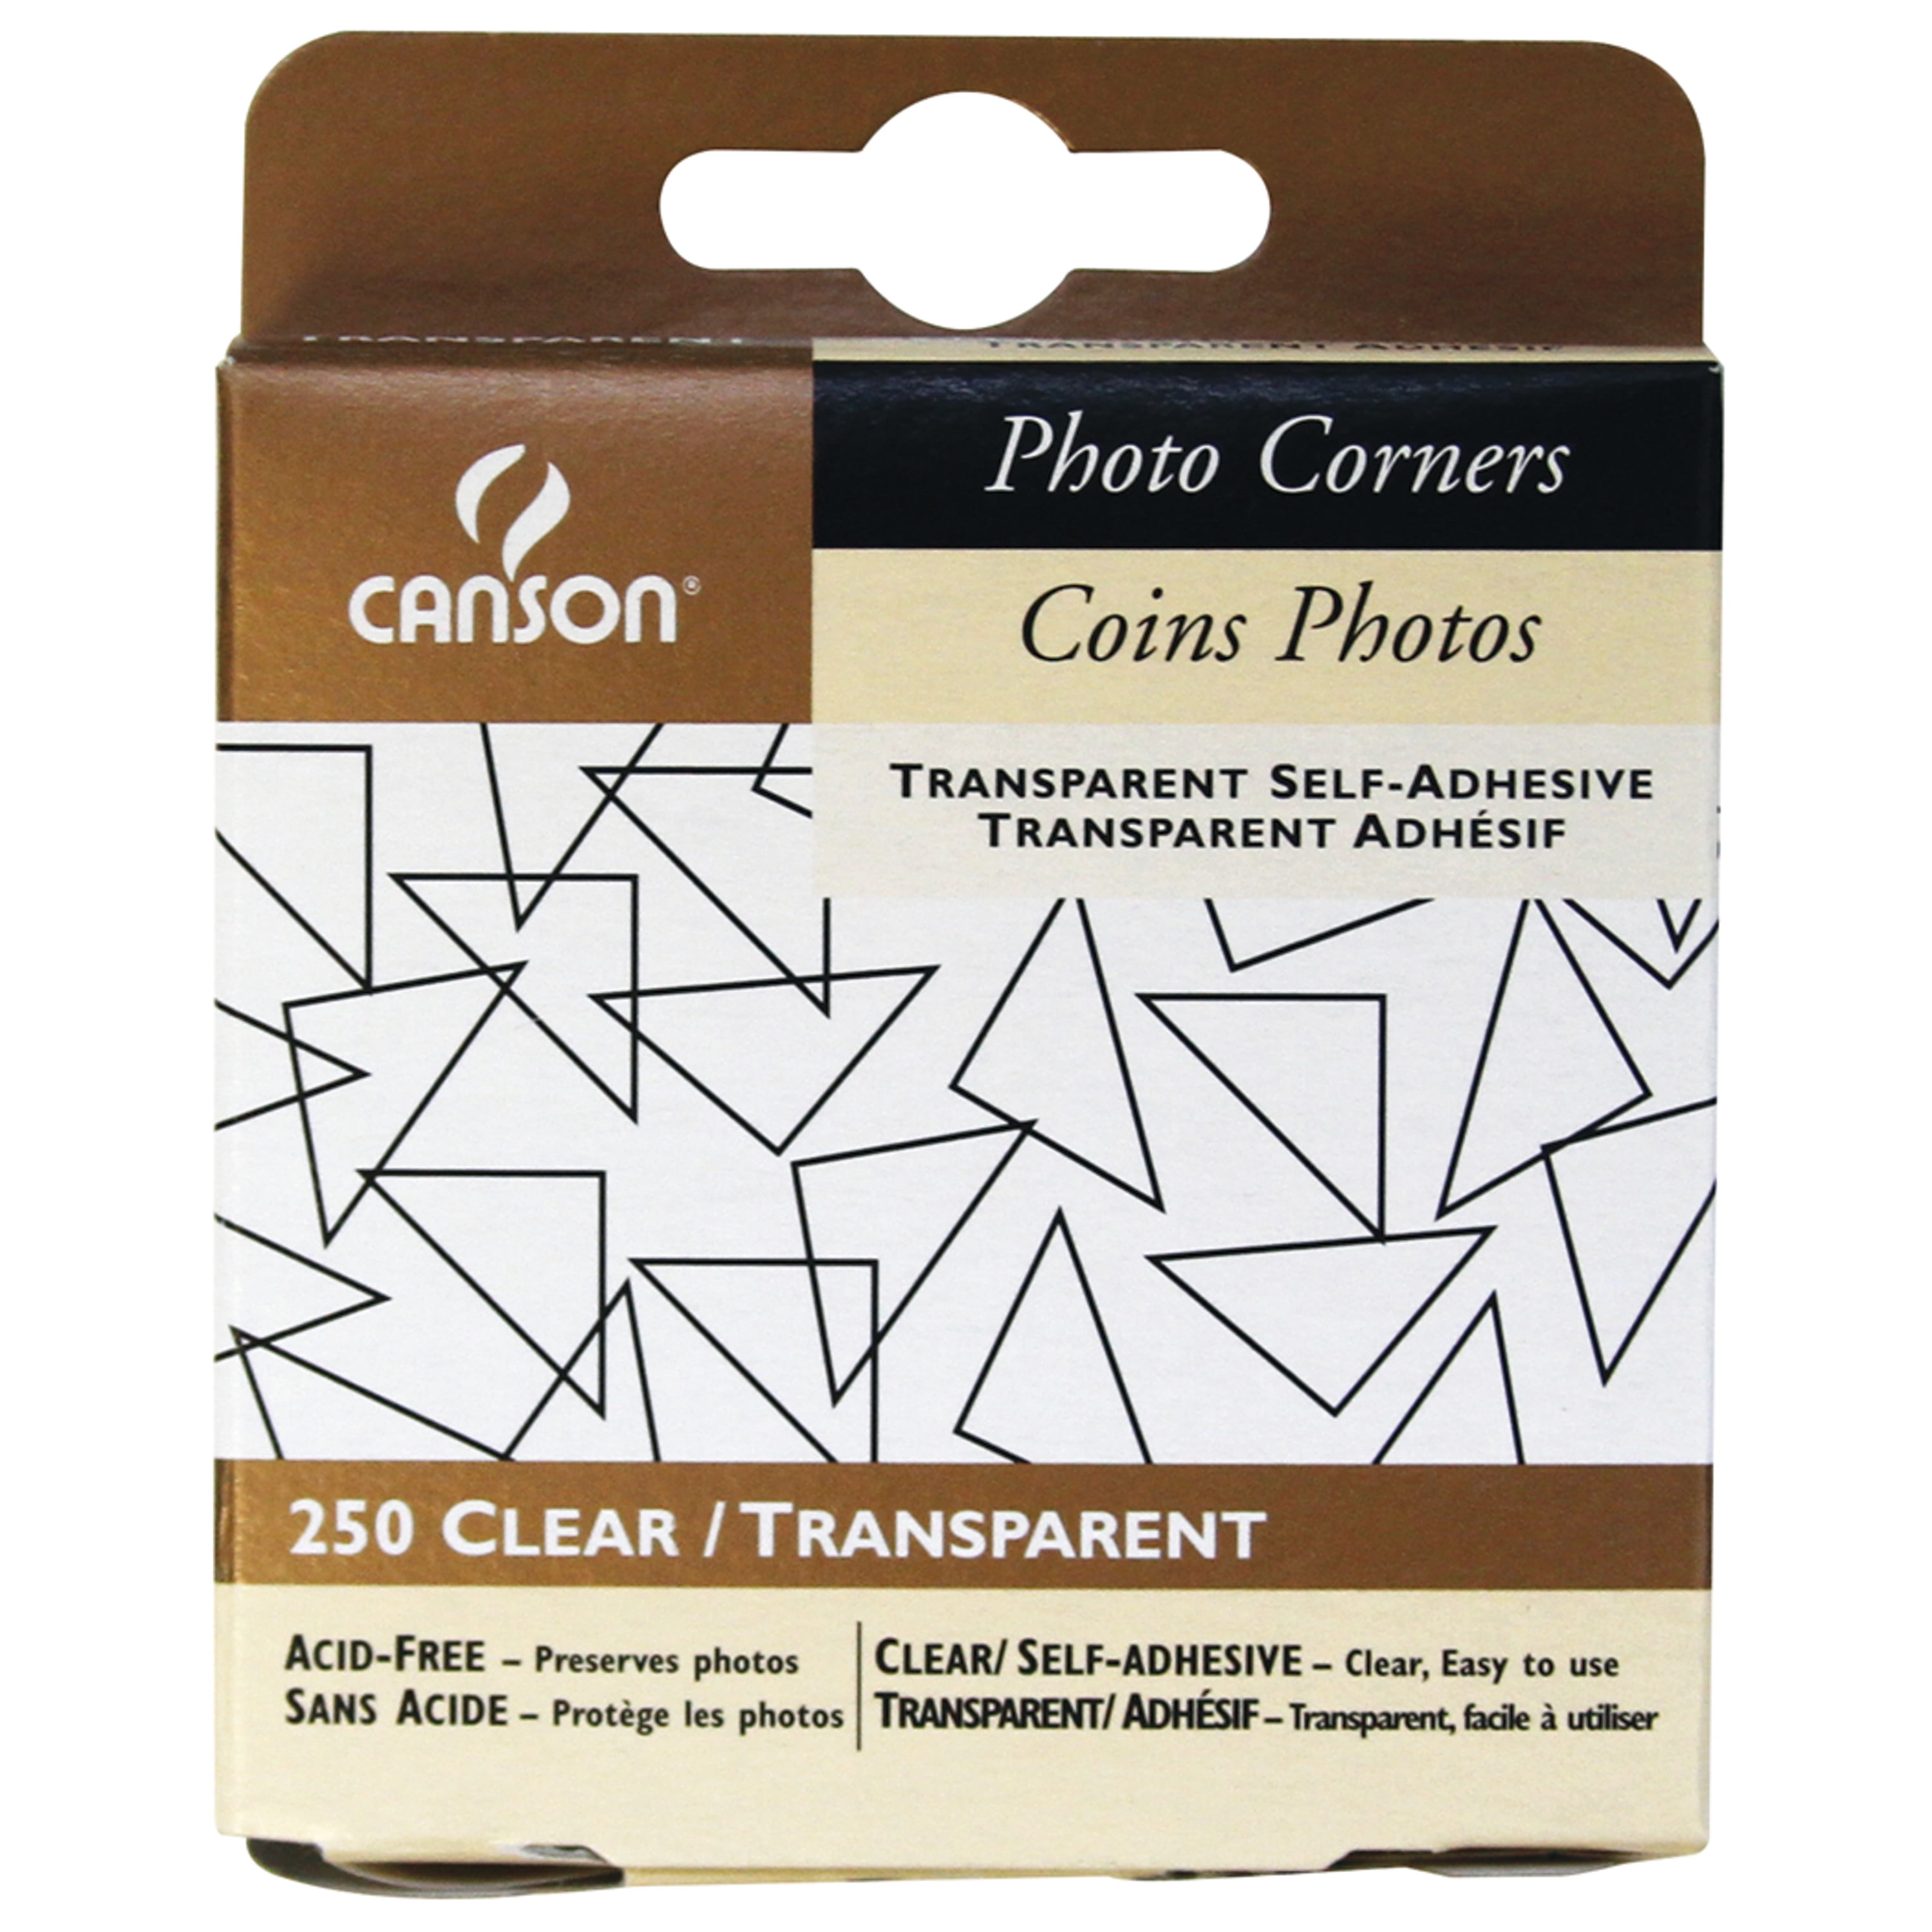 Canson Self Adhesive Photo Corners